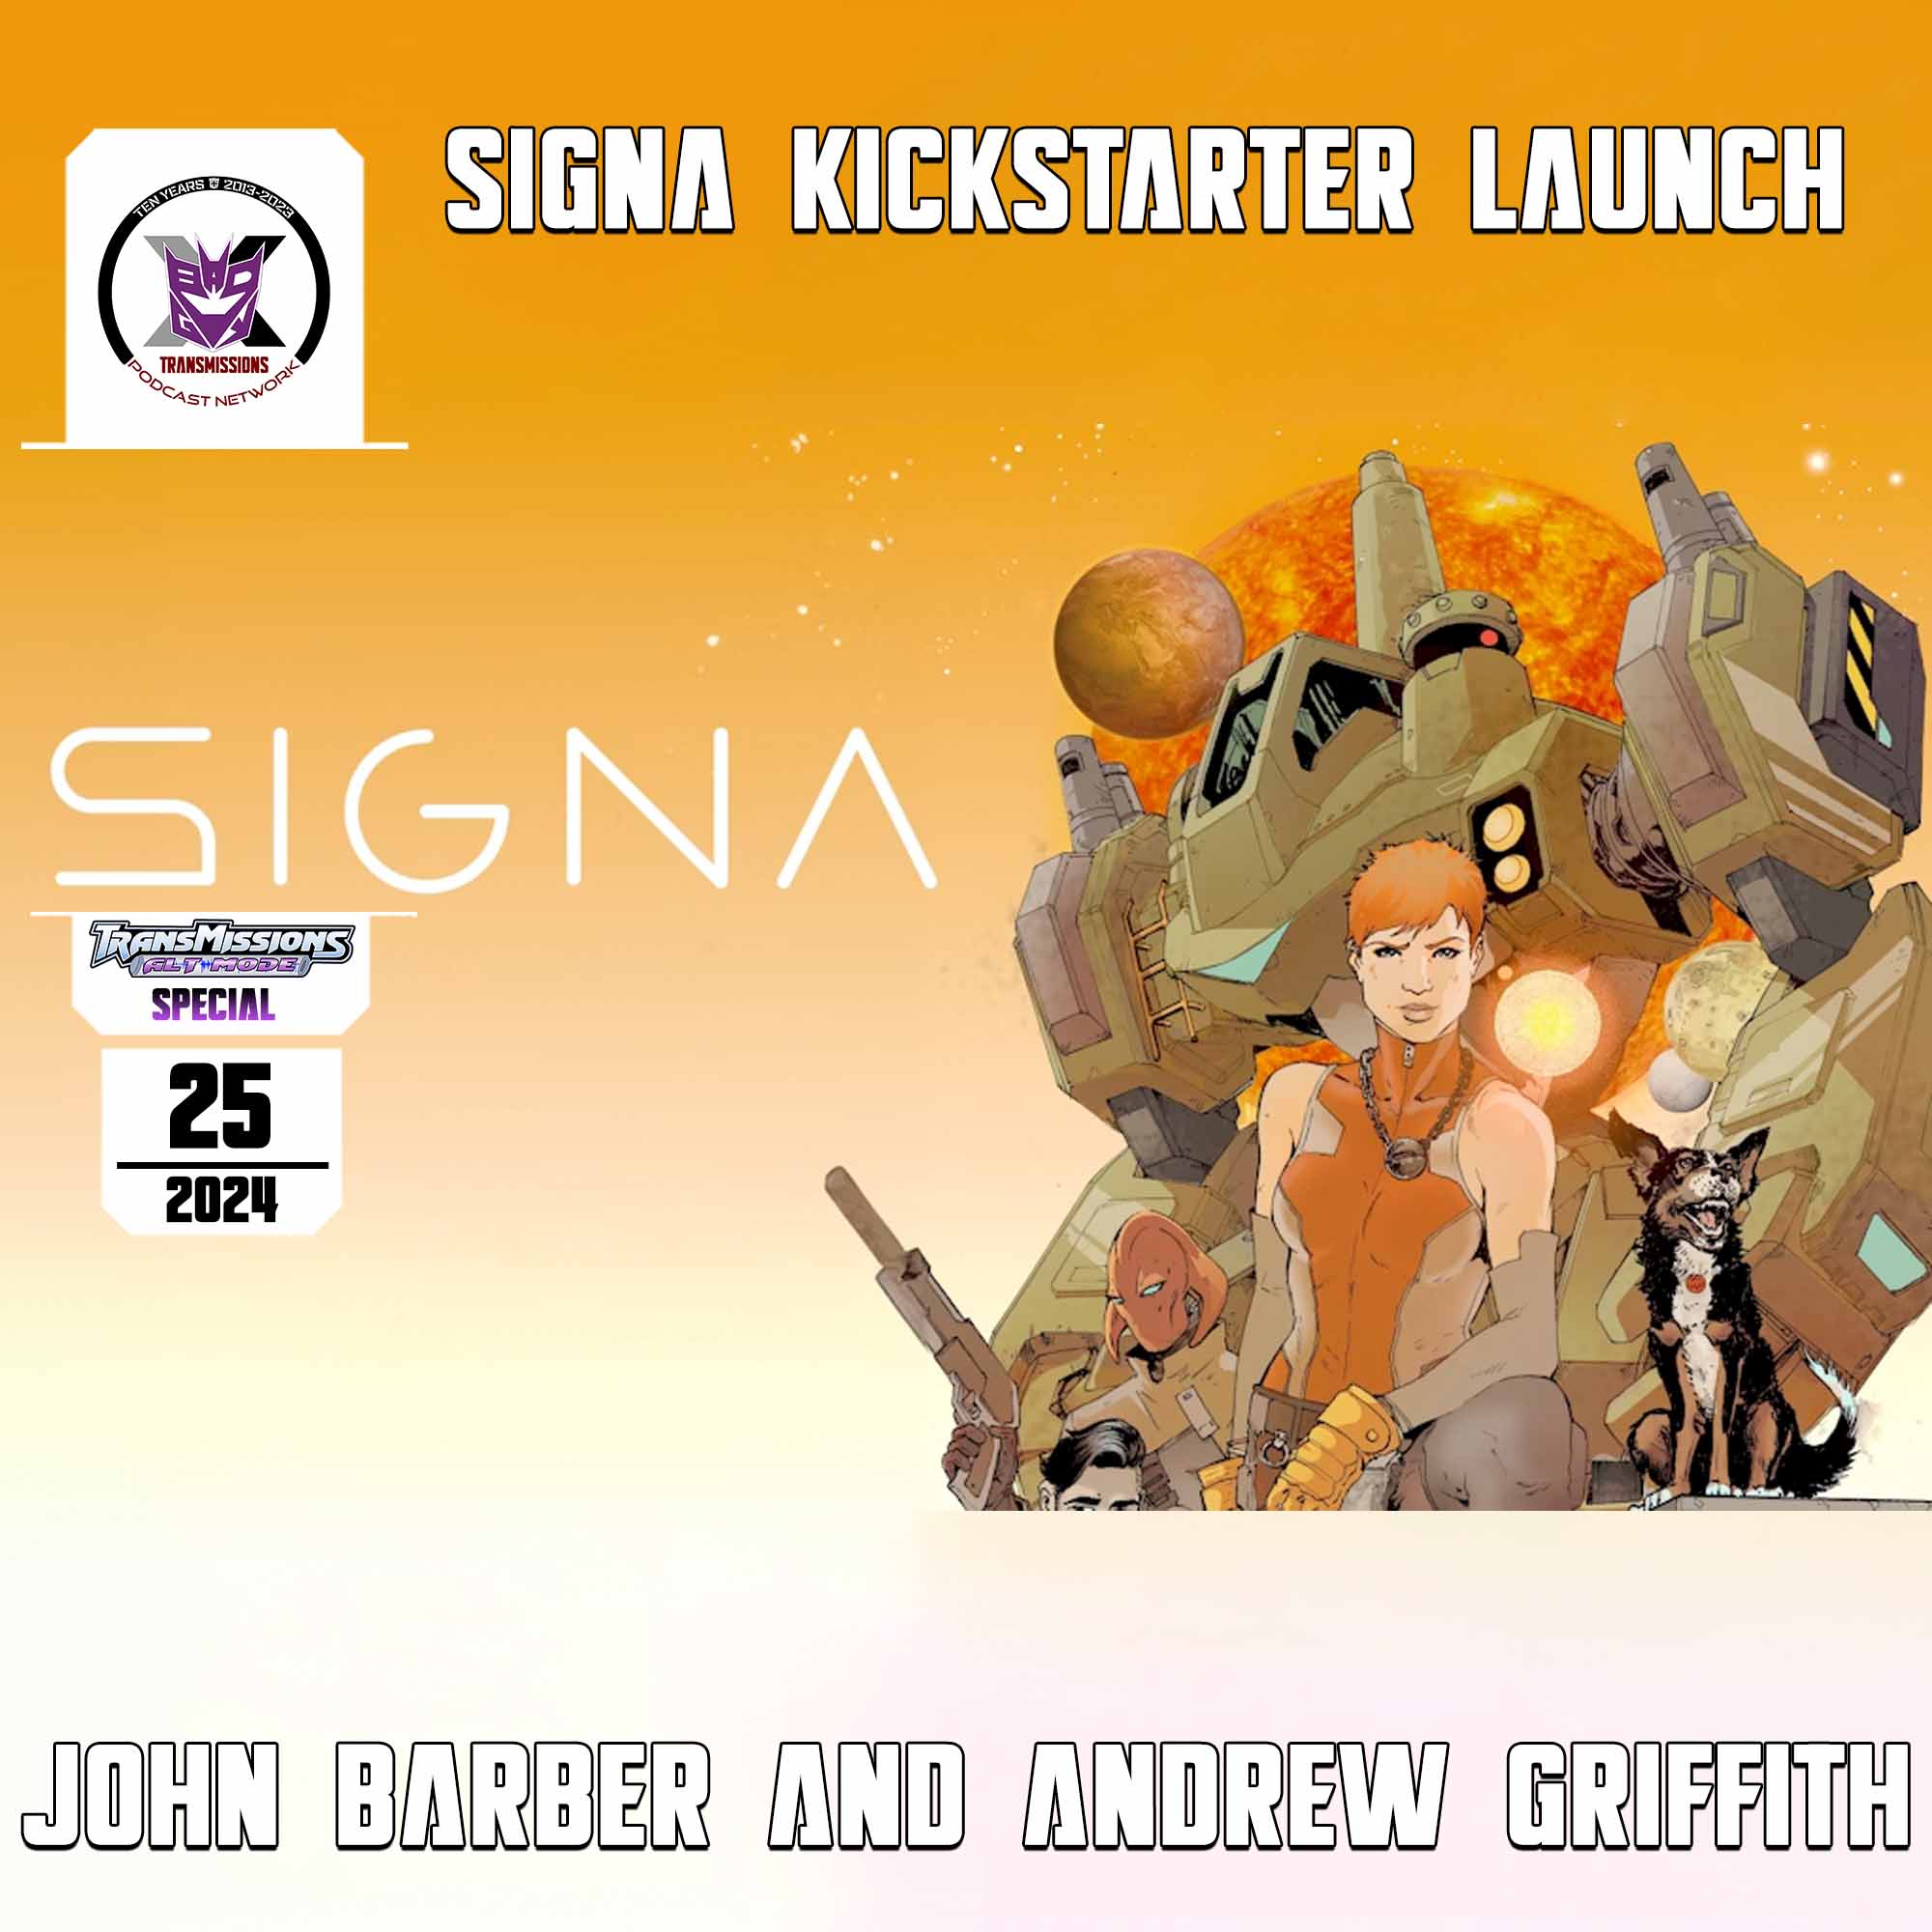 Signa Kickstarter Launch w/ John Barber & Andrew Griffith